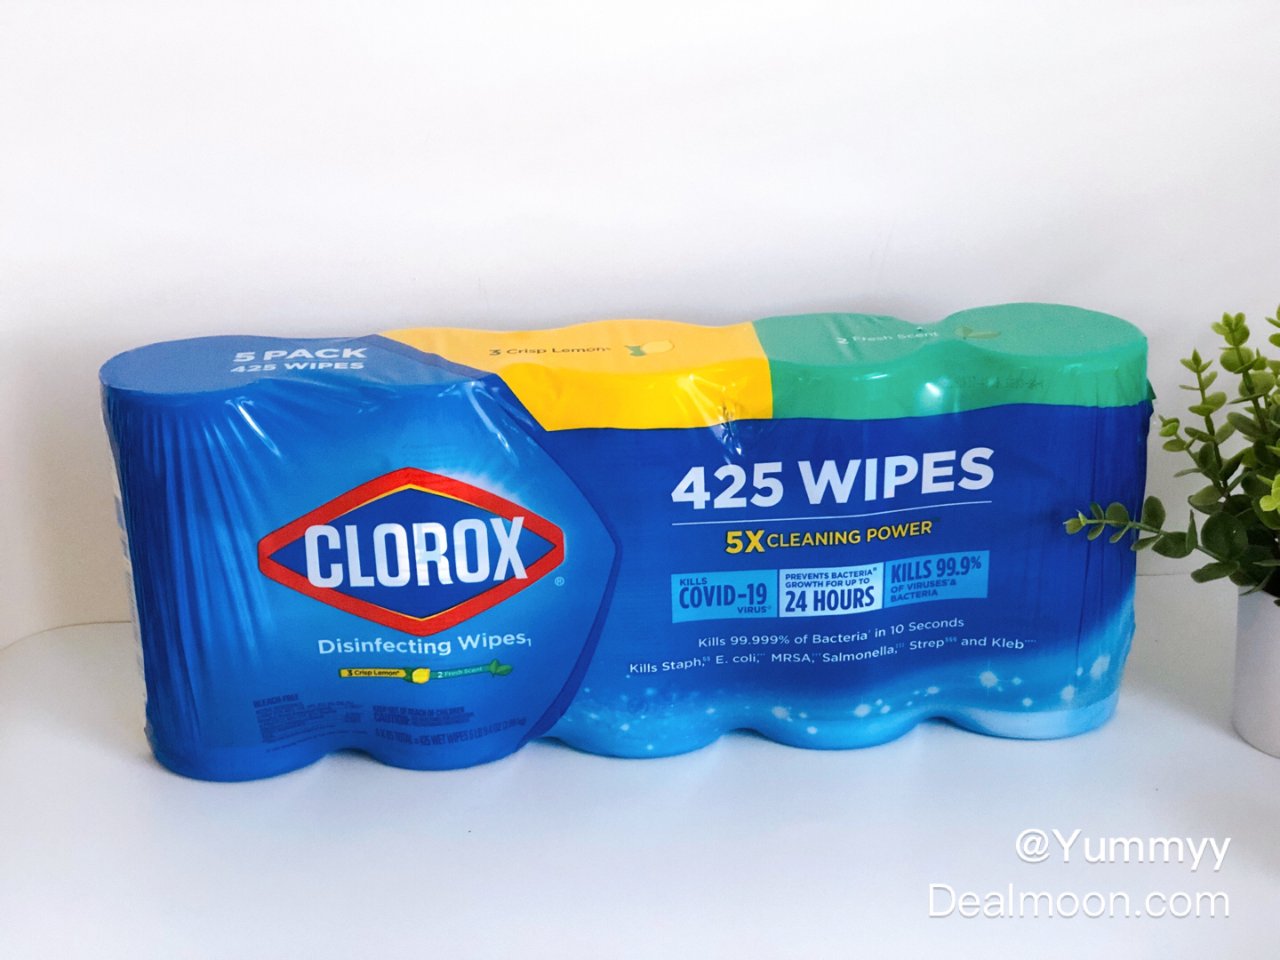 5/Clorox消毒纸巾囤货...